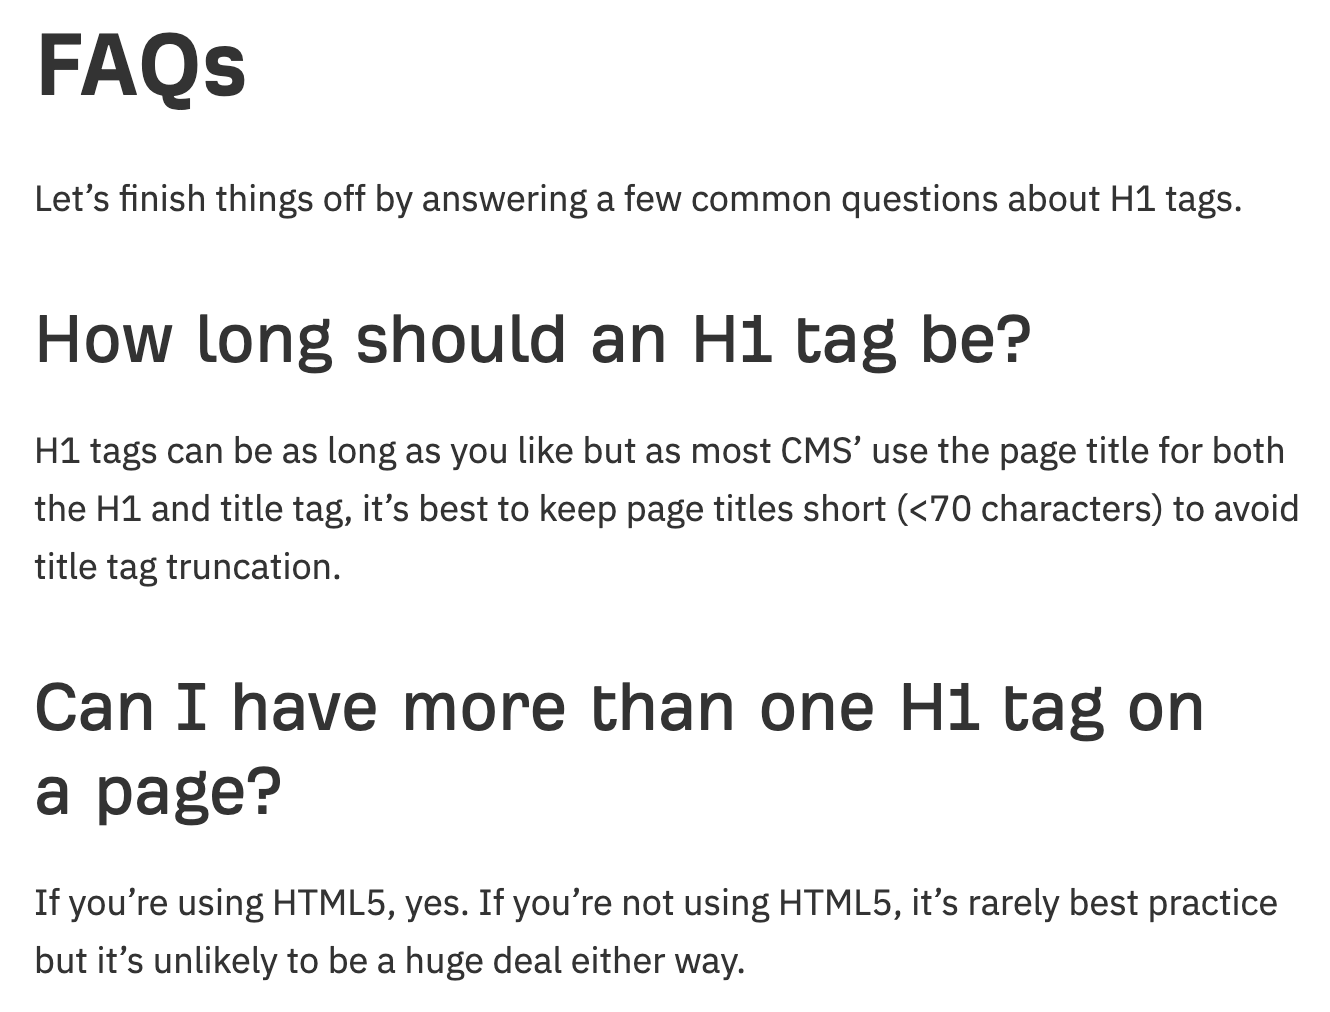 FAQs example, via Ahrefs Blog
